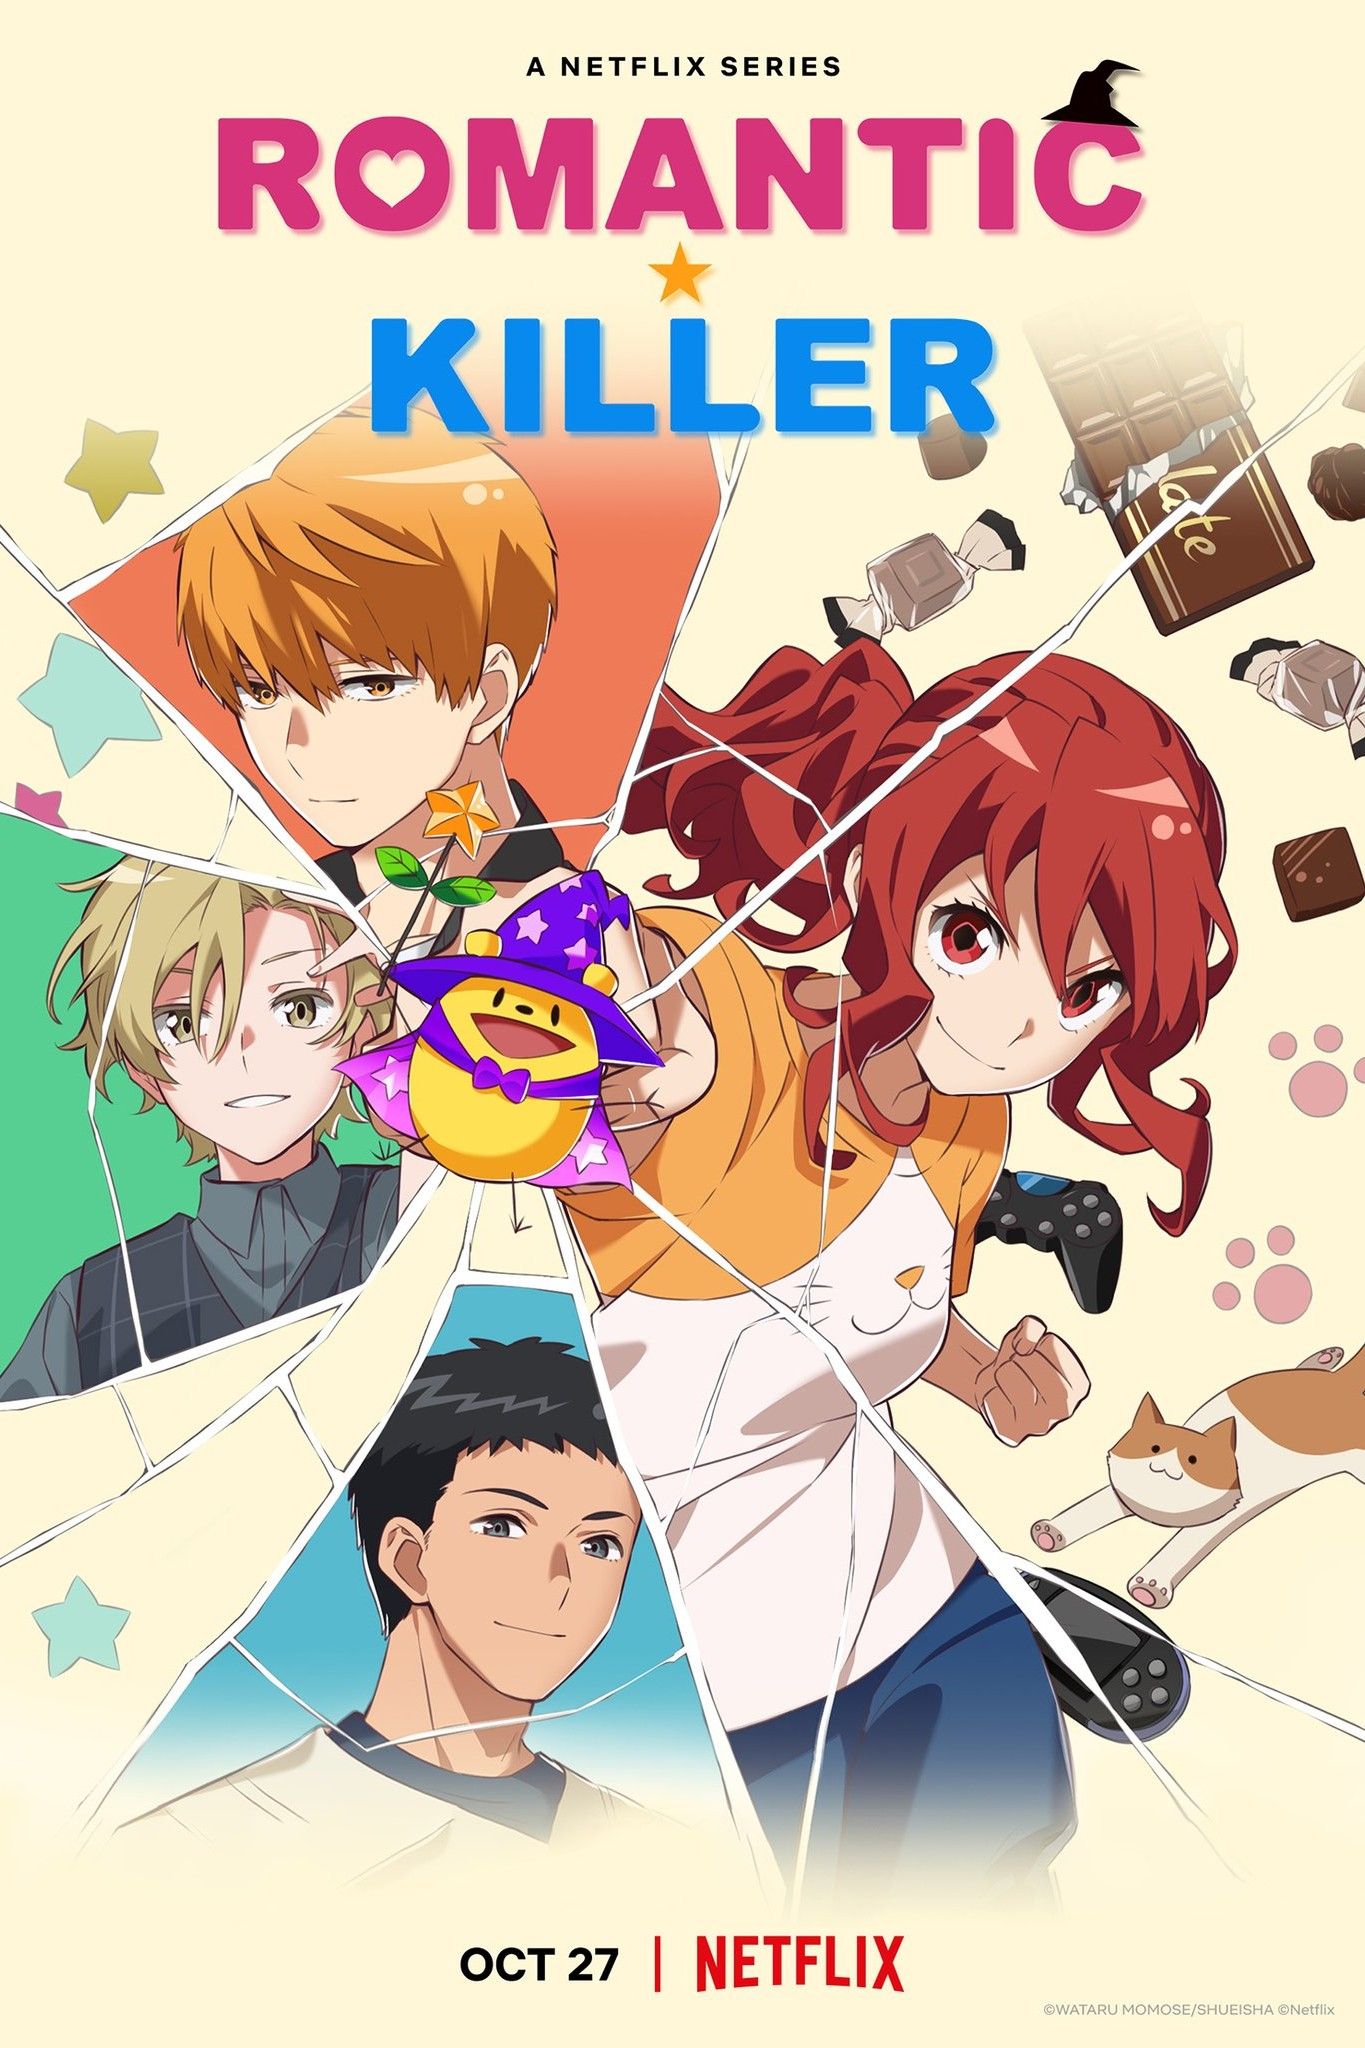 Anzu Hoshino punches Riri breaking through the three love intersts in Romantic Killer TV Poster